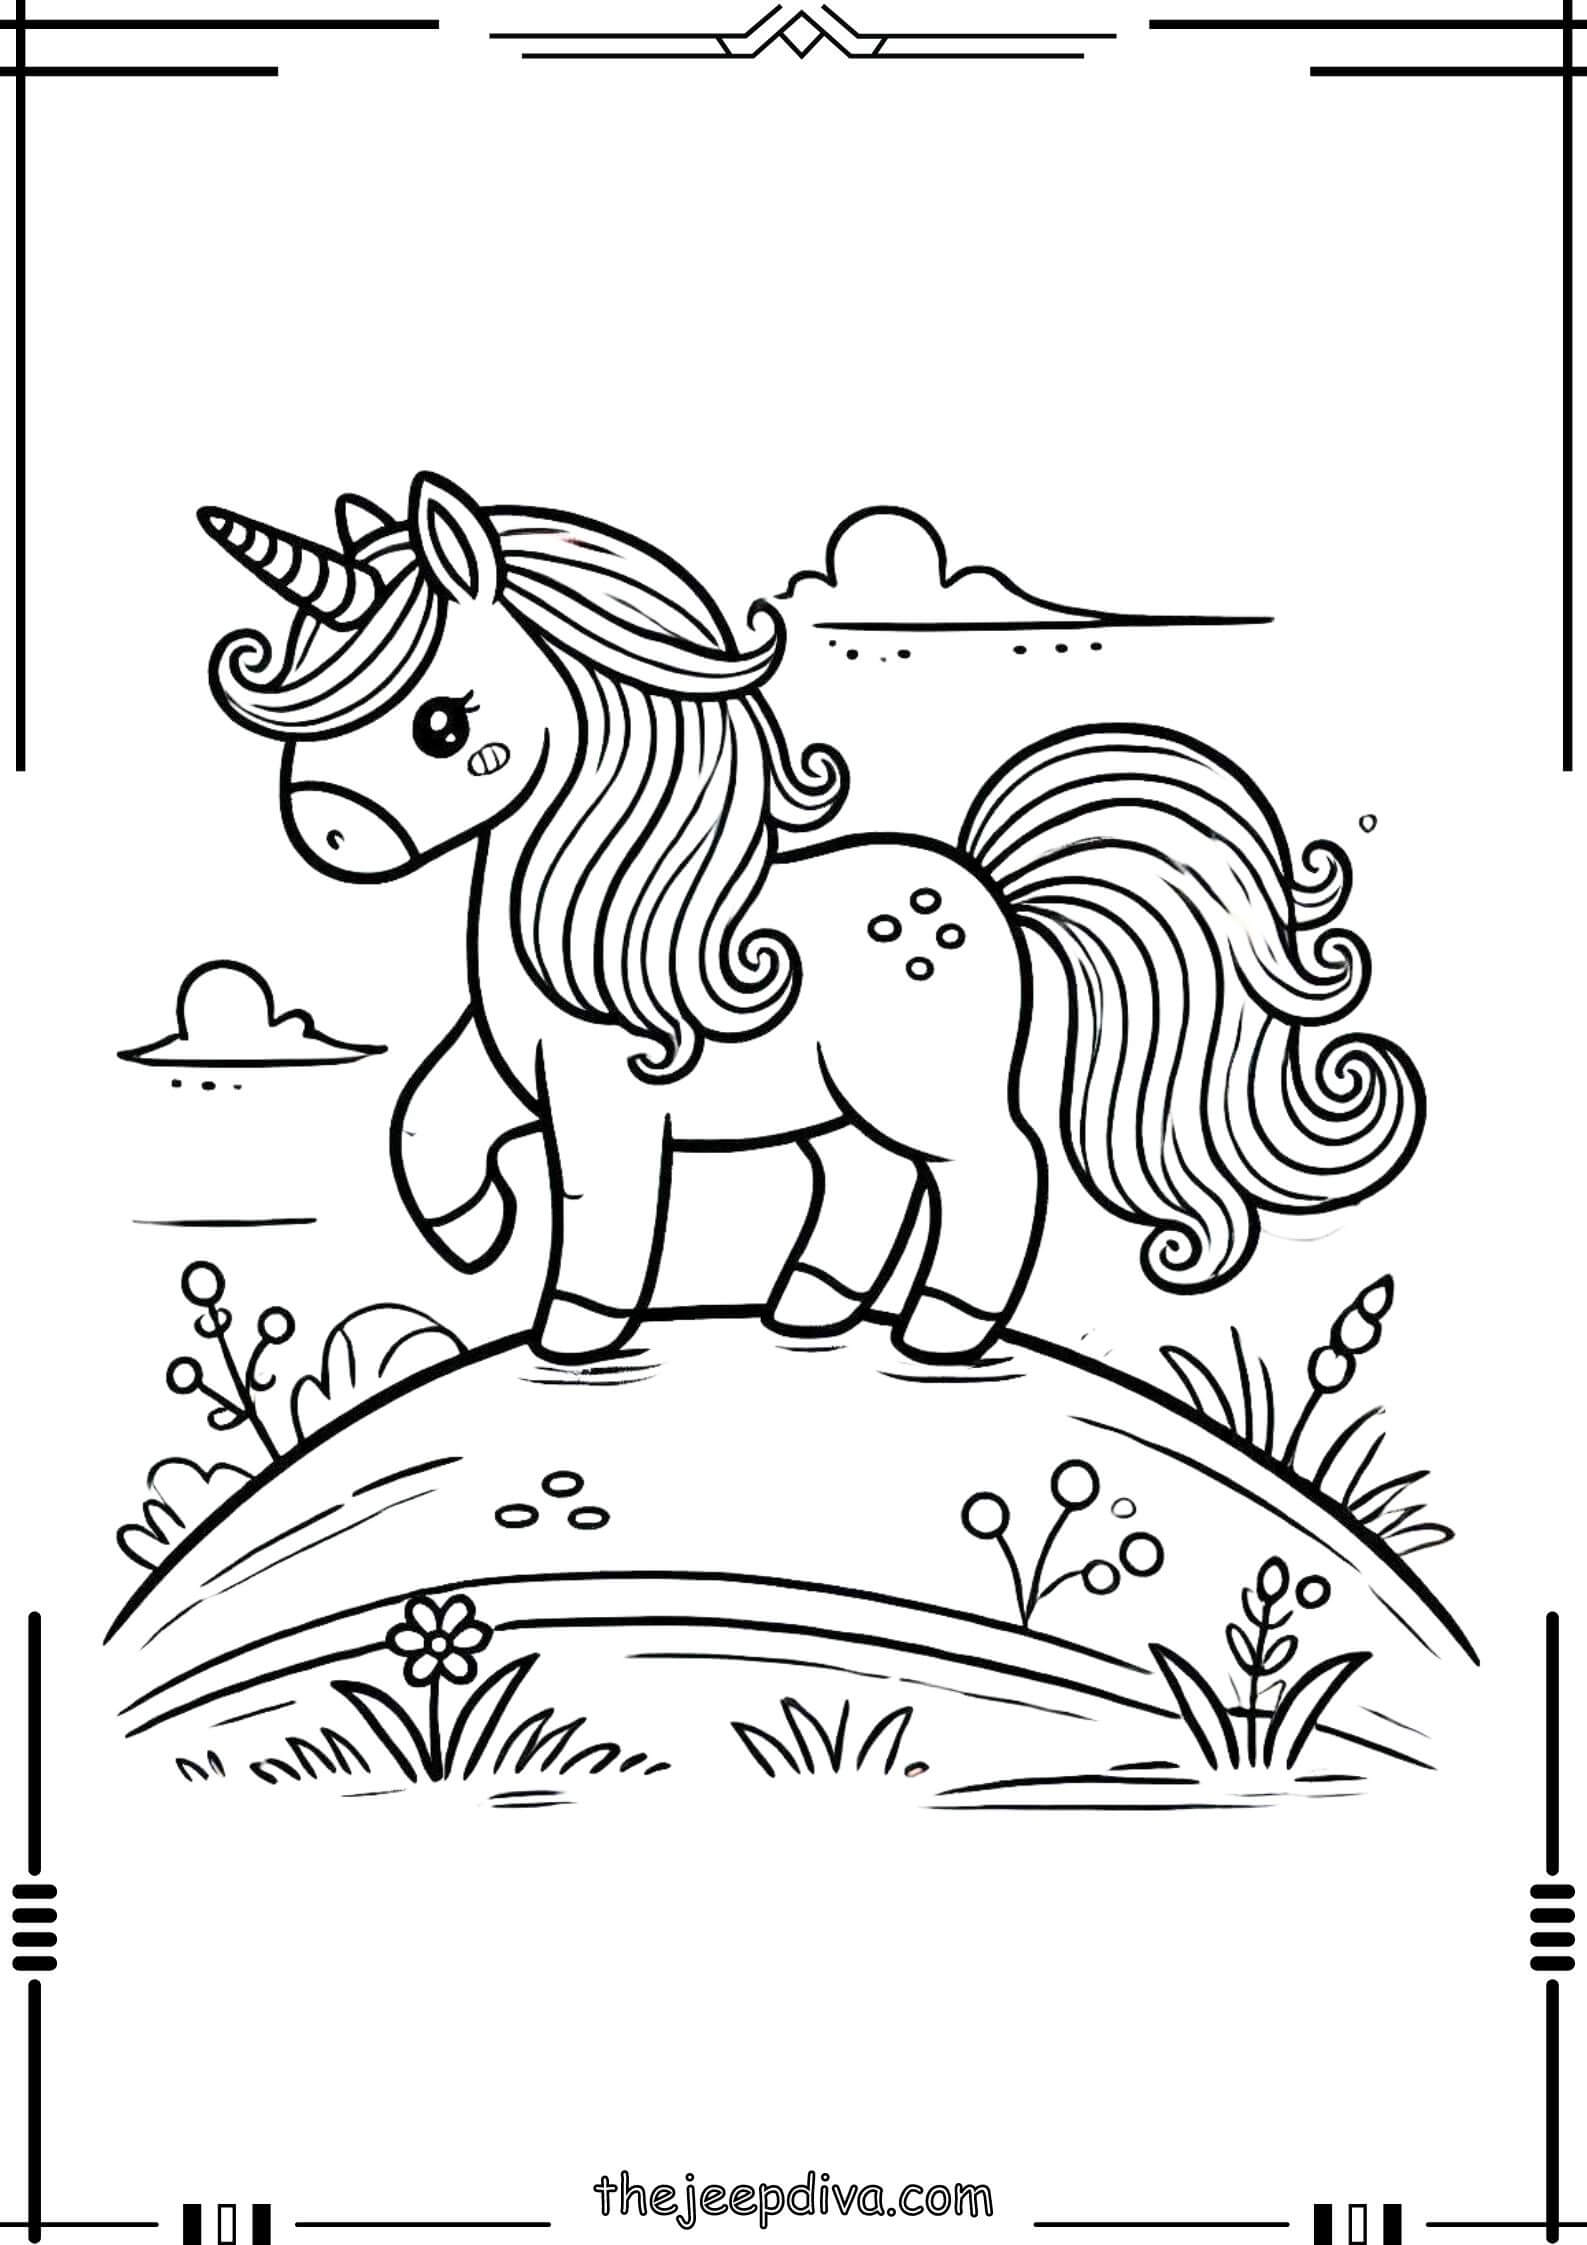 unicorn-coloring-page-medium-4